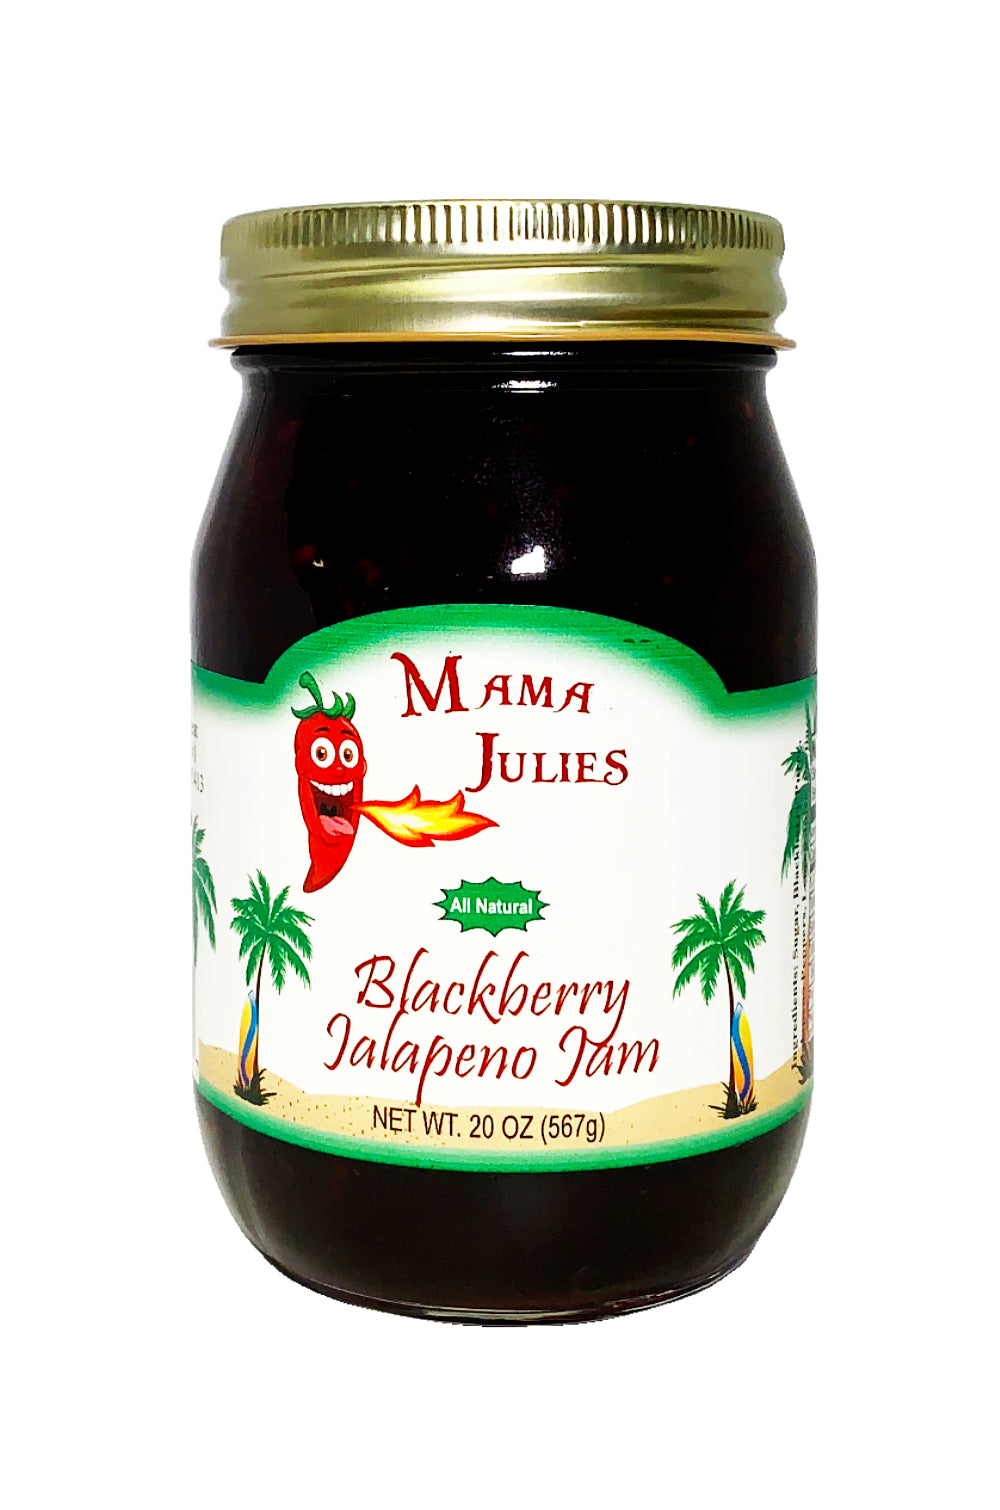 Mama Julie's Blackberry Jalapeno Jam